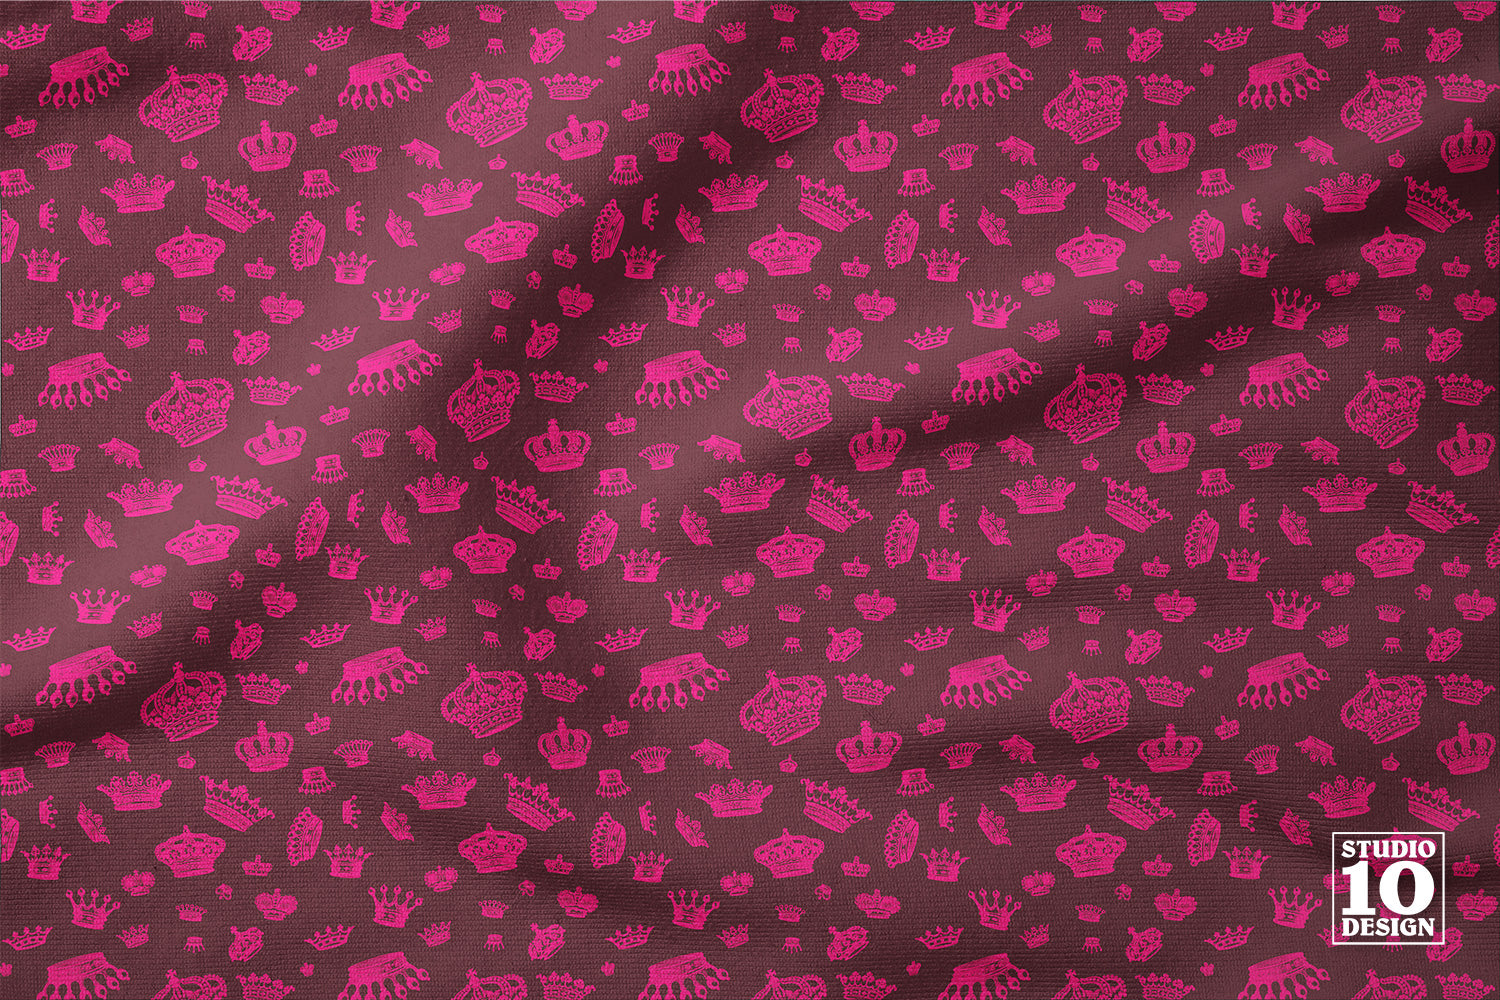 Royal Crowns Hot Pink+Maroon Printed Fabric by Studio Ten Design